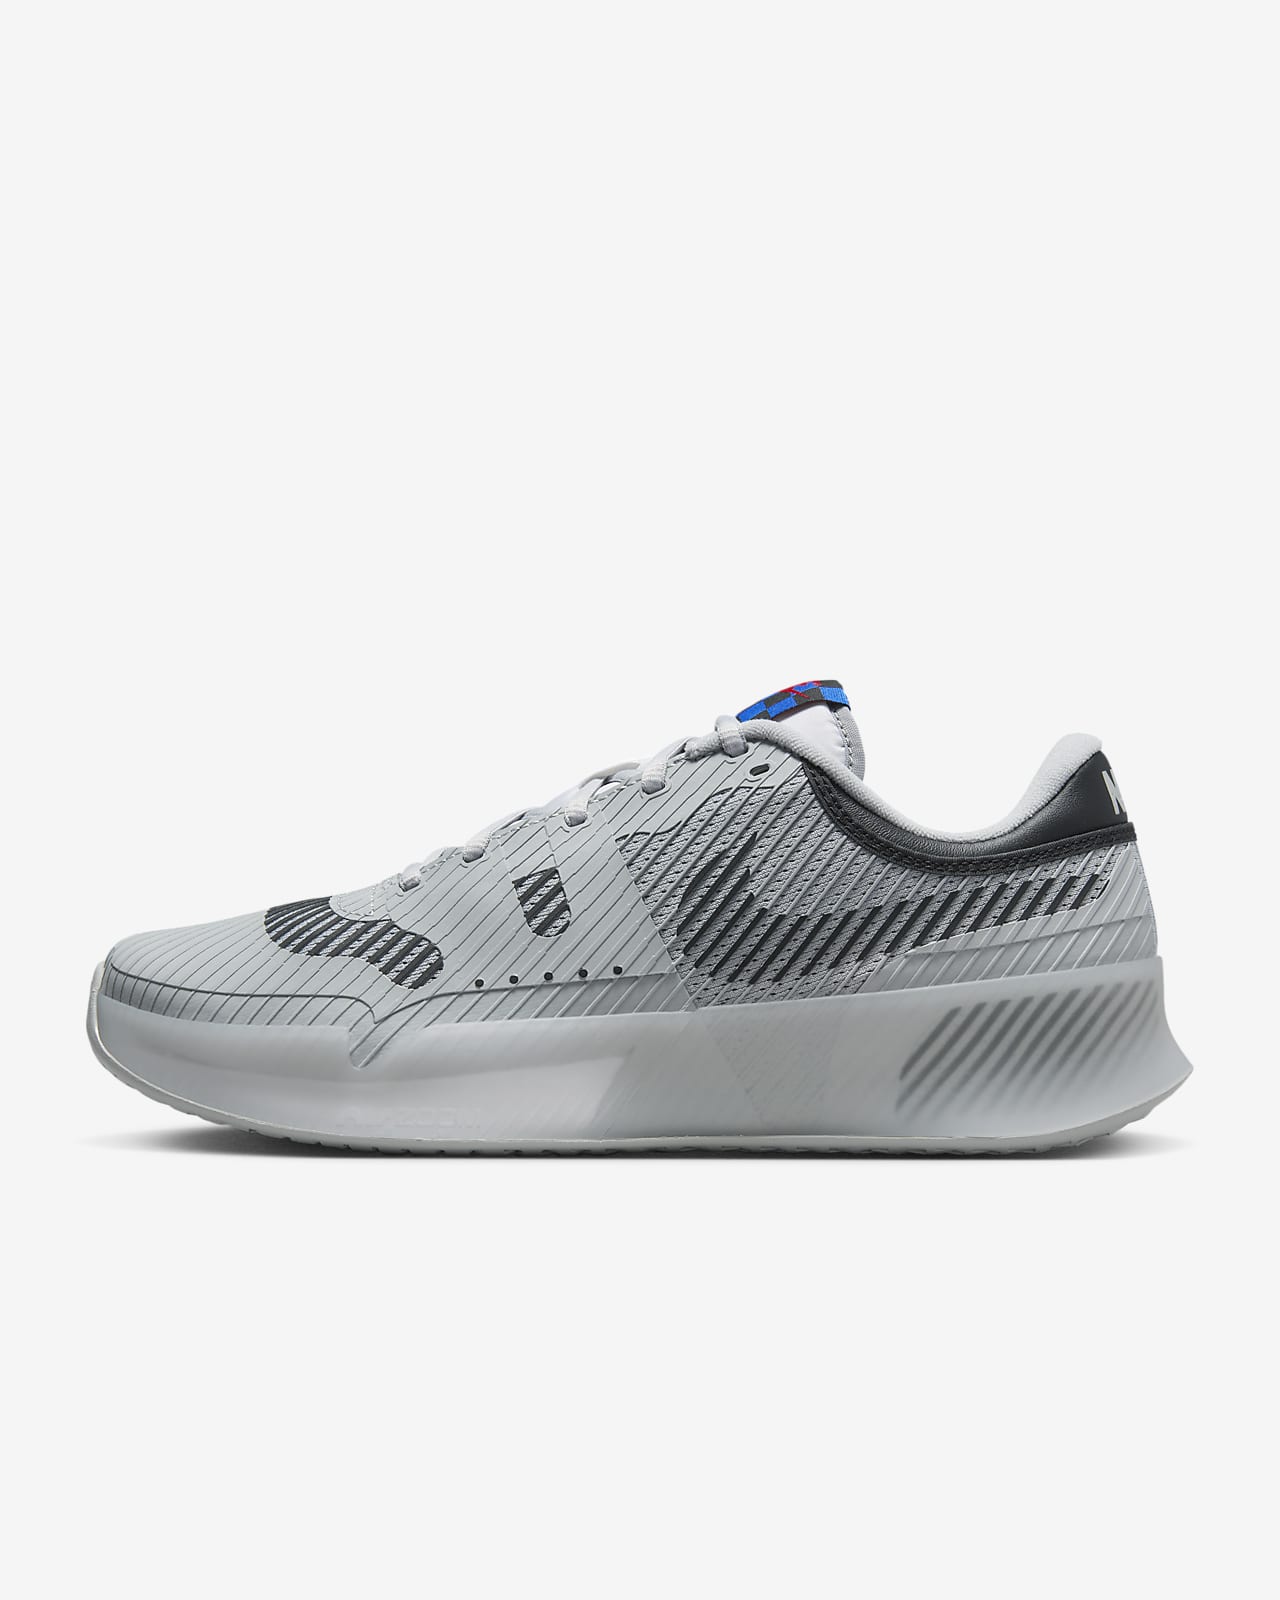 Mavin | Nike Shoes Mens Size 11.5 Force Zoom Trout 8 Turf White Grey  Baseball DJ6522-100